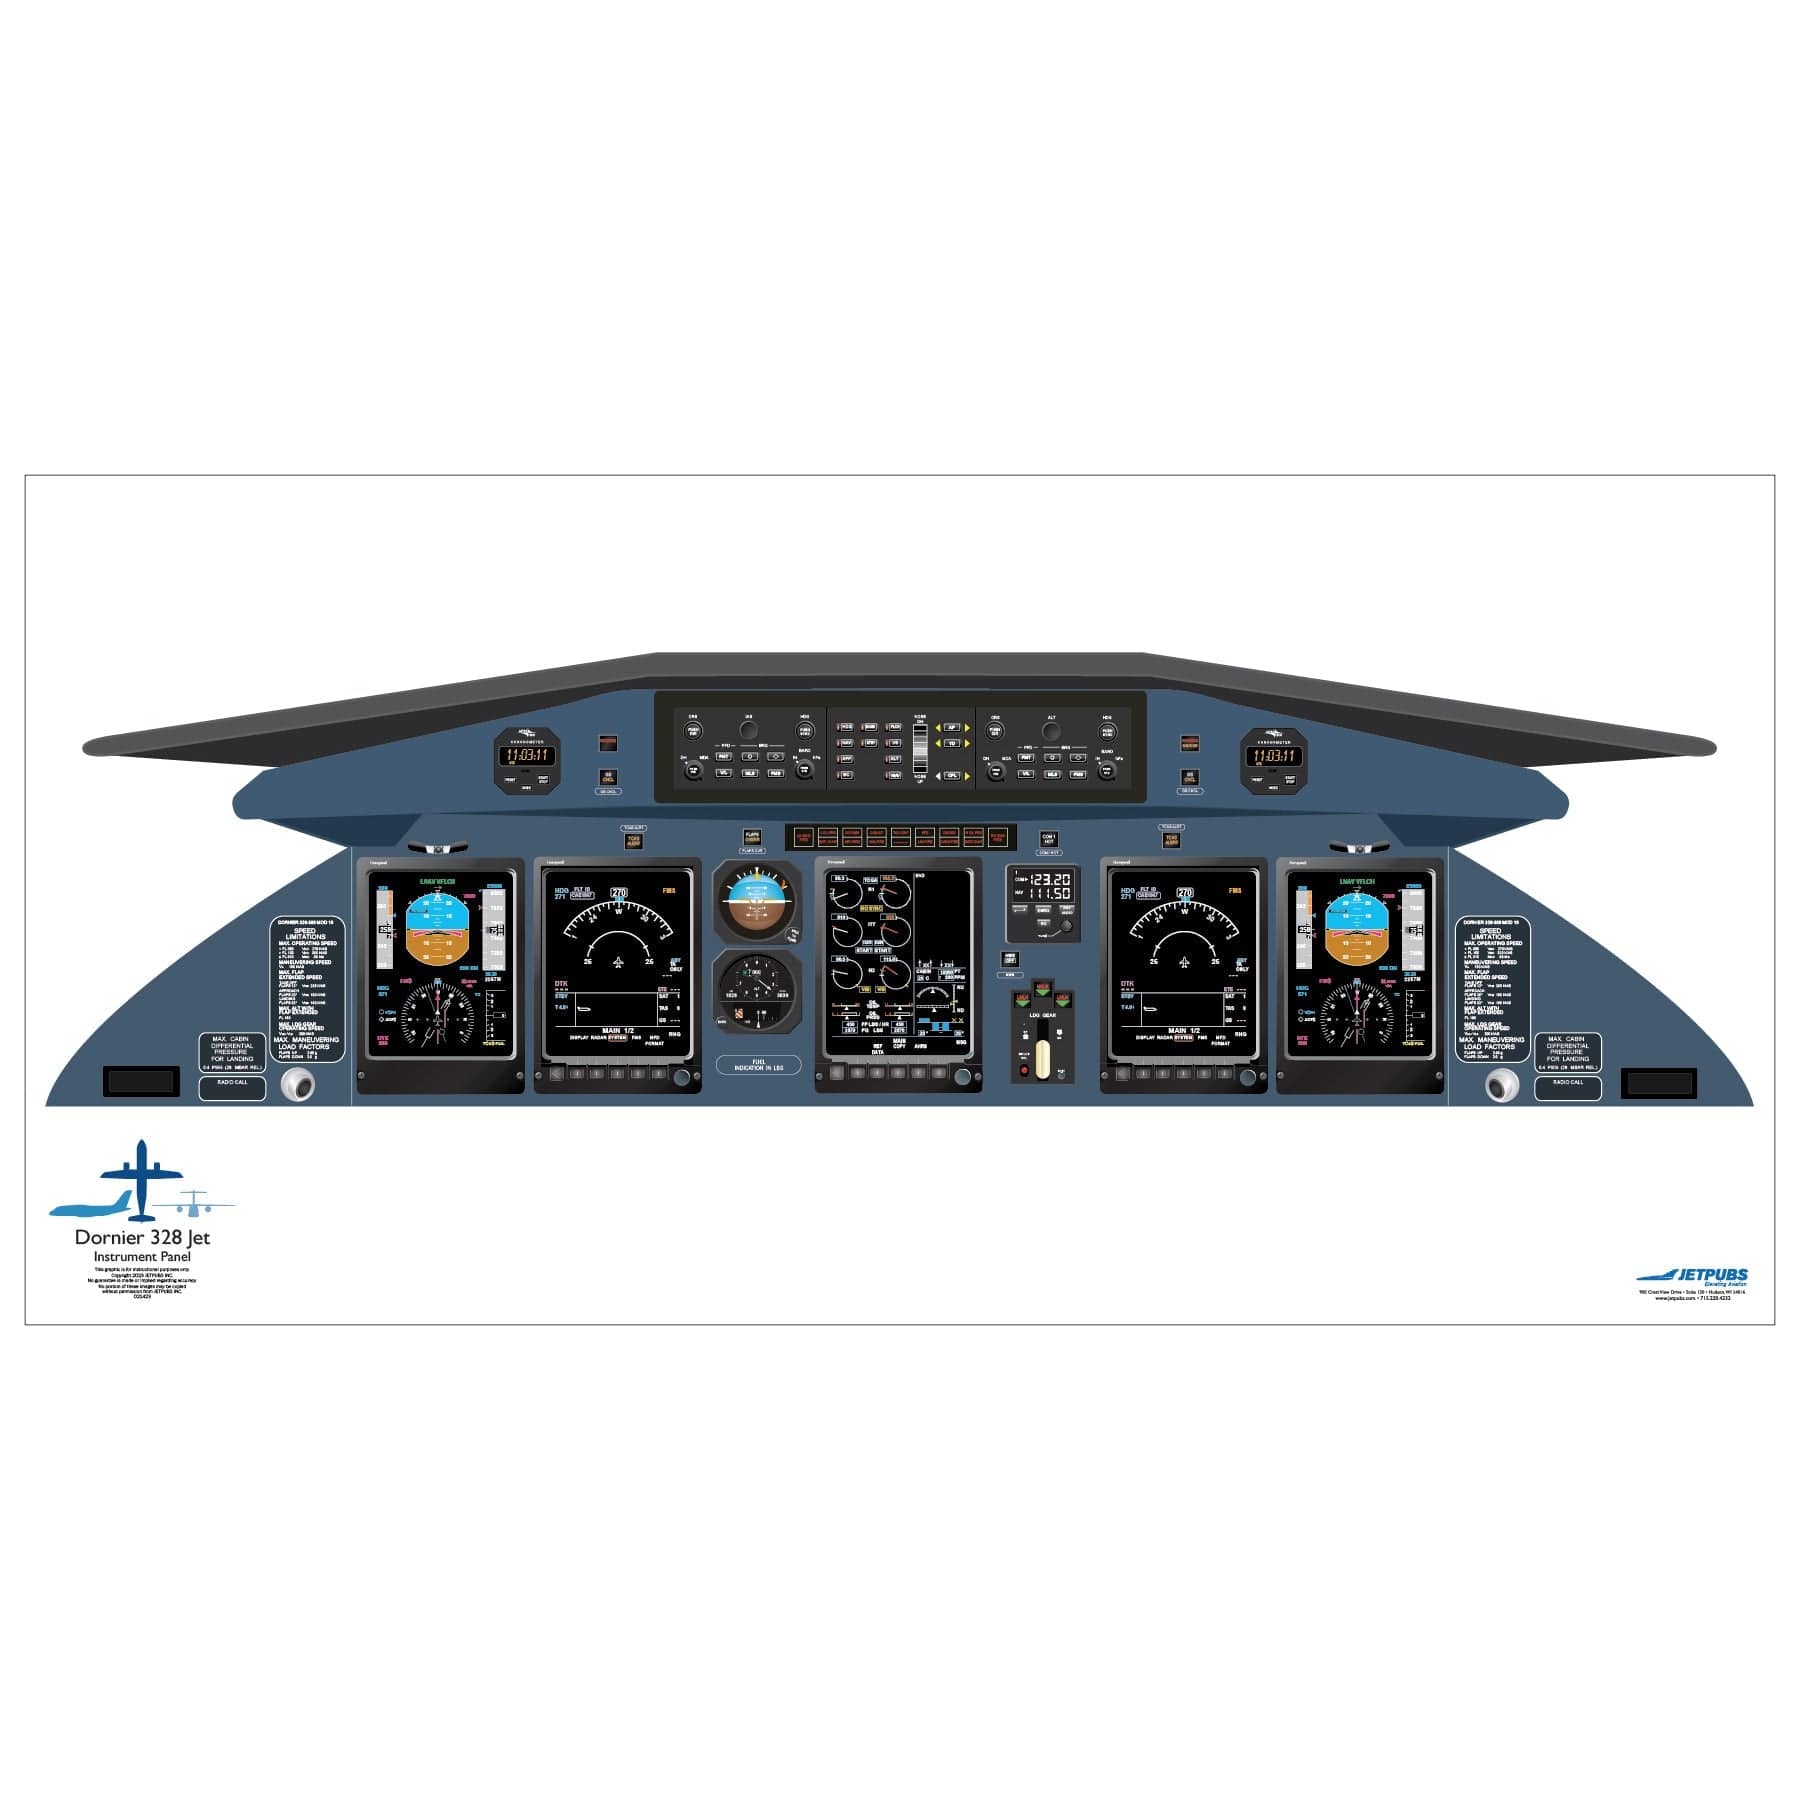 Dornier - Fairchild 18" x 36" Cockpit Posters - PilotMall.com